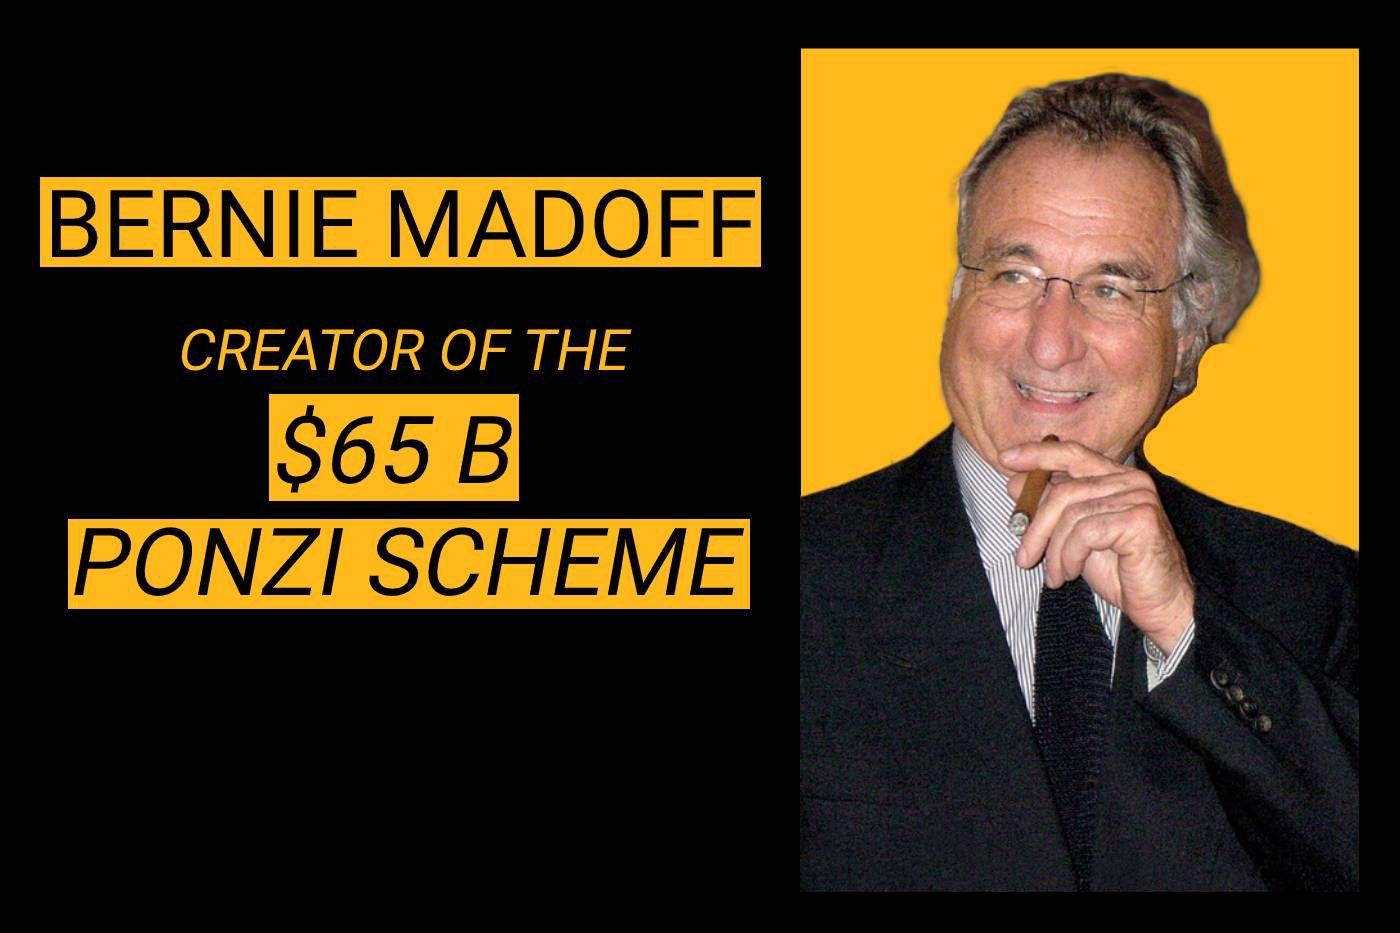 Bernie Madoff, the only Ponzi schemer that landed in prison, has died.